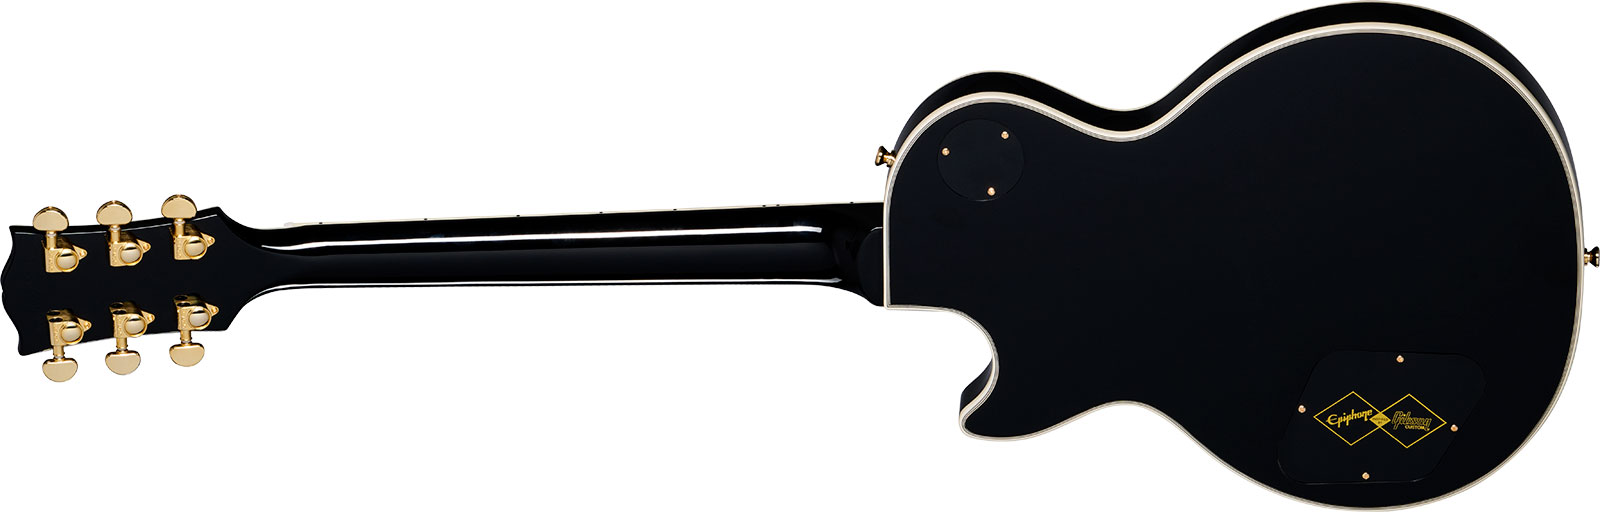 Epiphone Les Paul Custom Inspired By 2h Ht Eb - Ebony - Single cut electric guitar - Variation 1